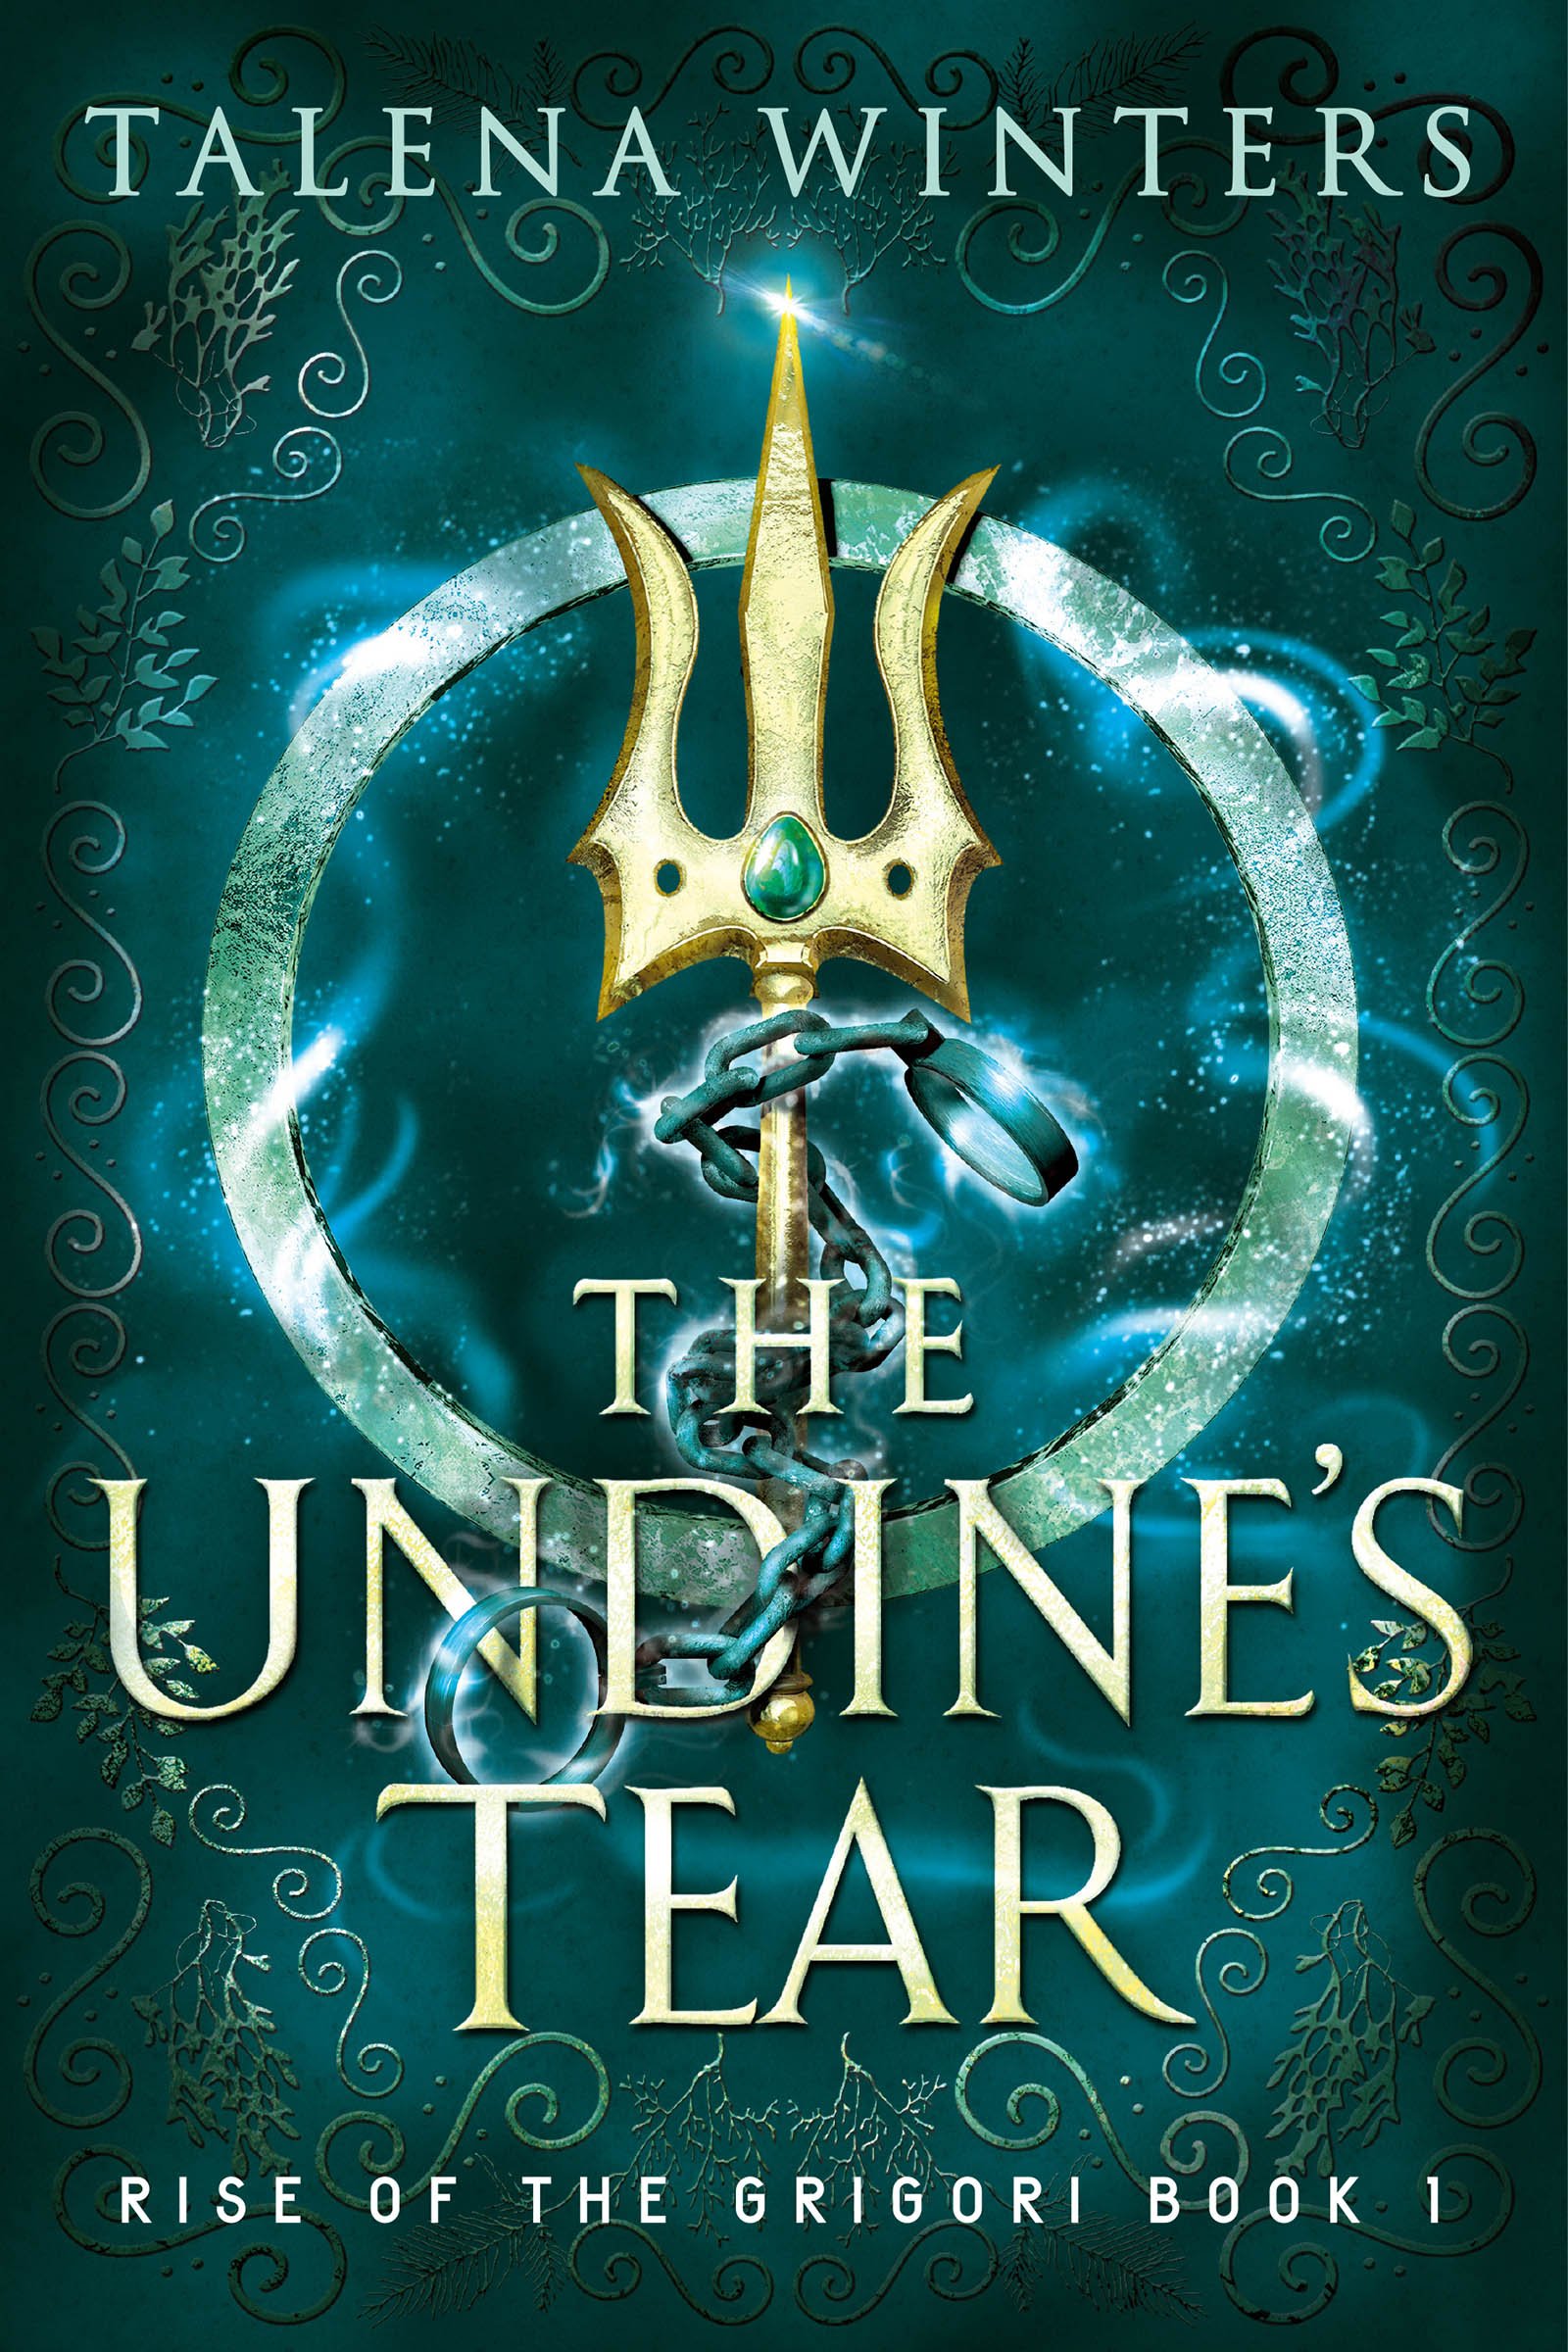 The Undine's Tear by Talena Winters